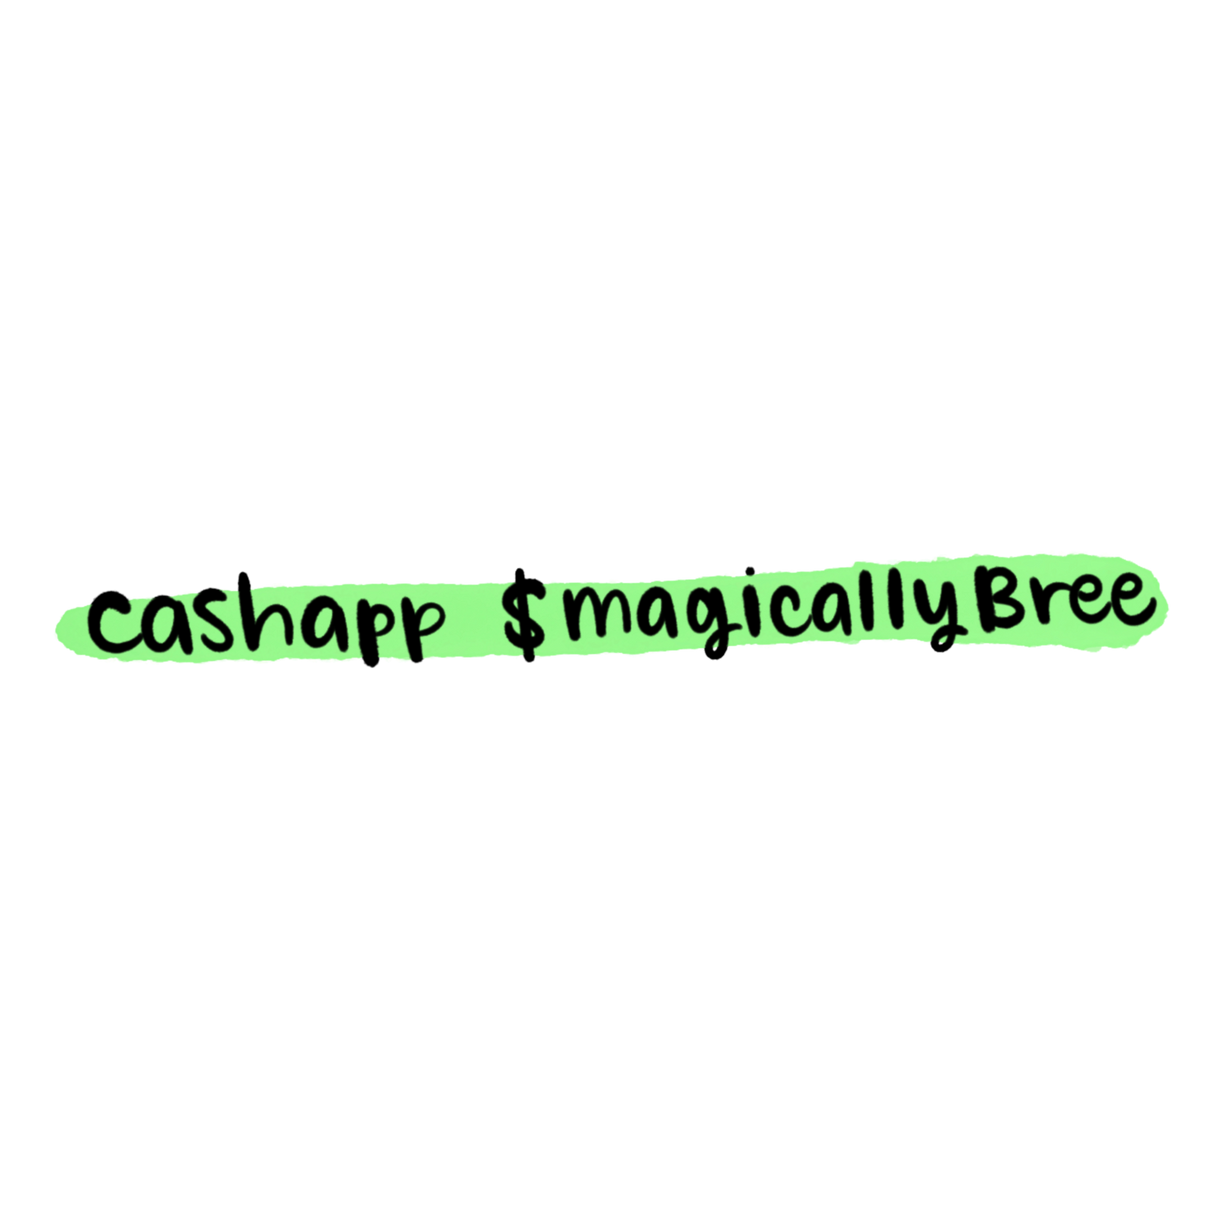 Cashapp link $magicallybree